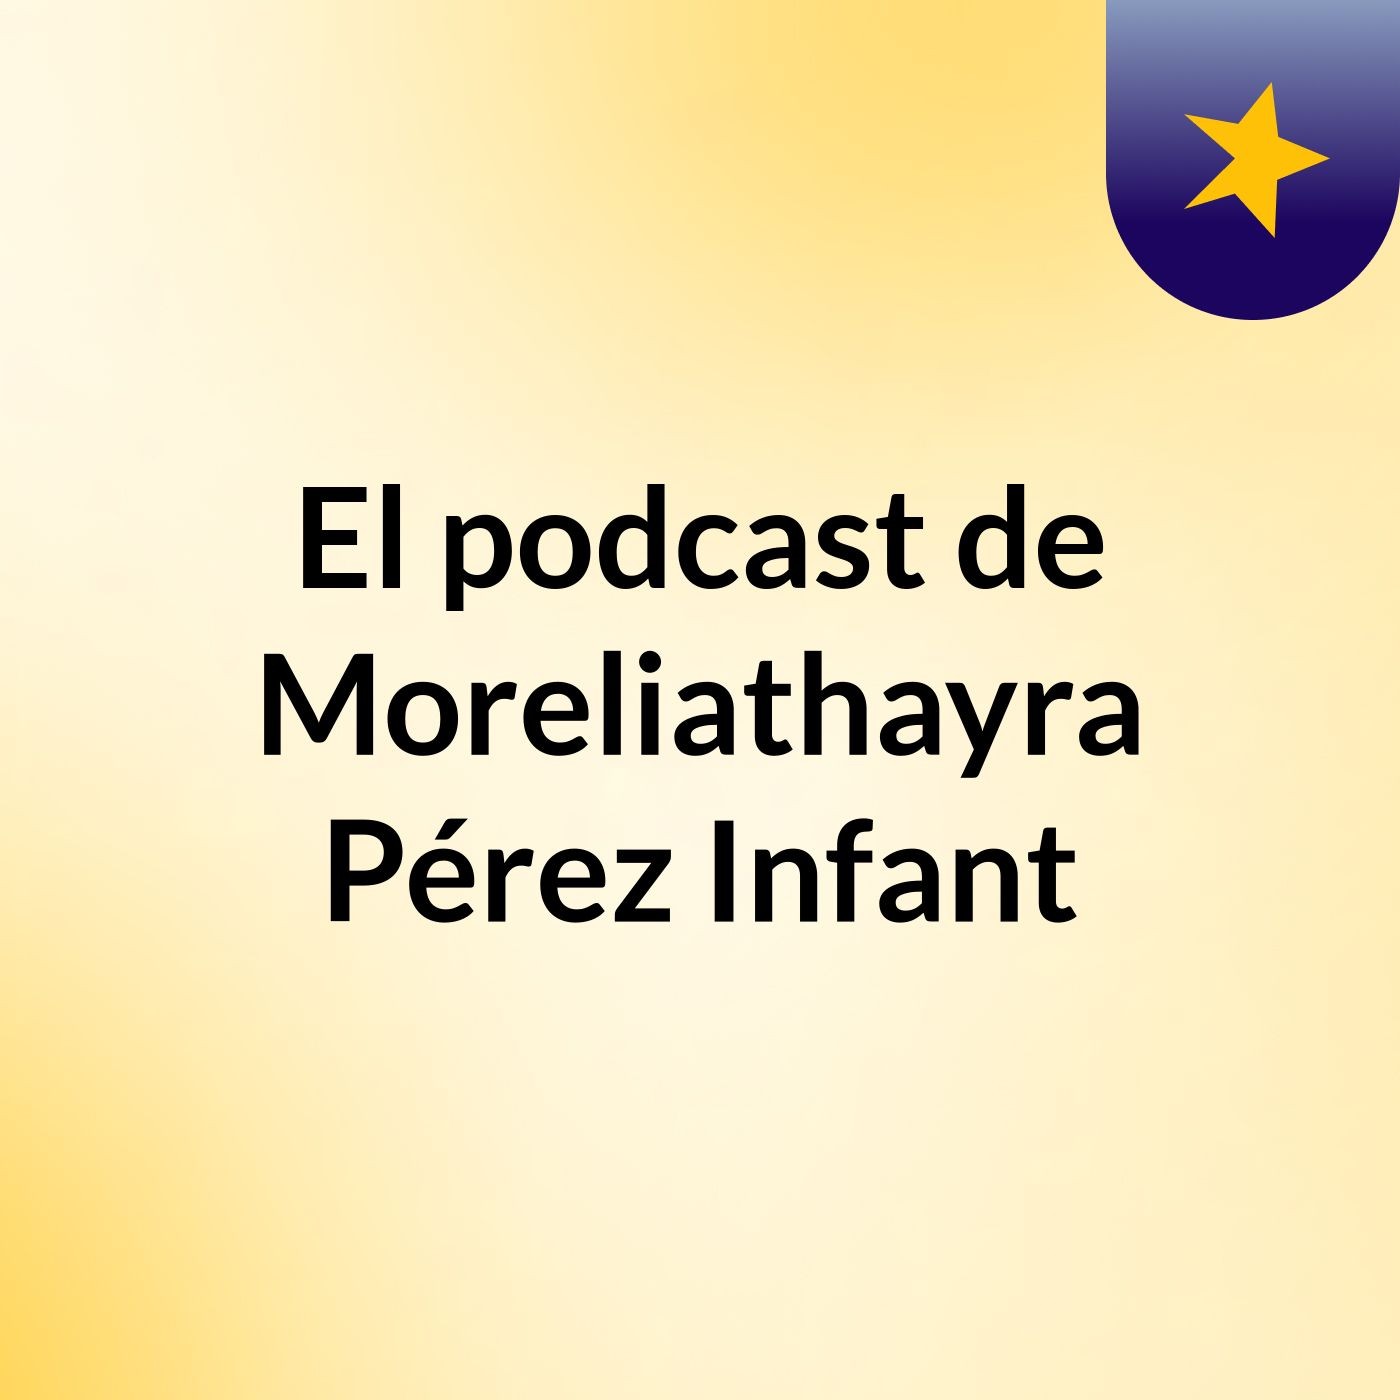 El podcast de Moreliathayra Pérez Infant